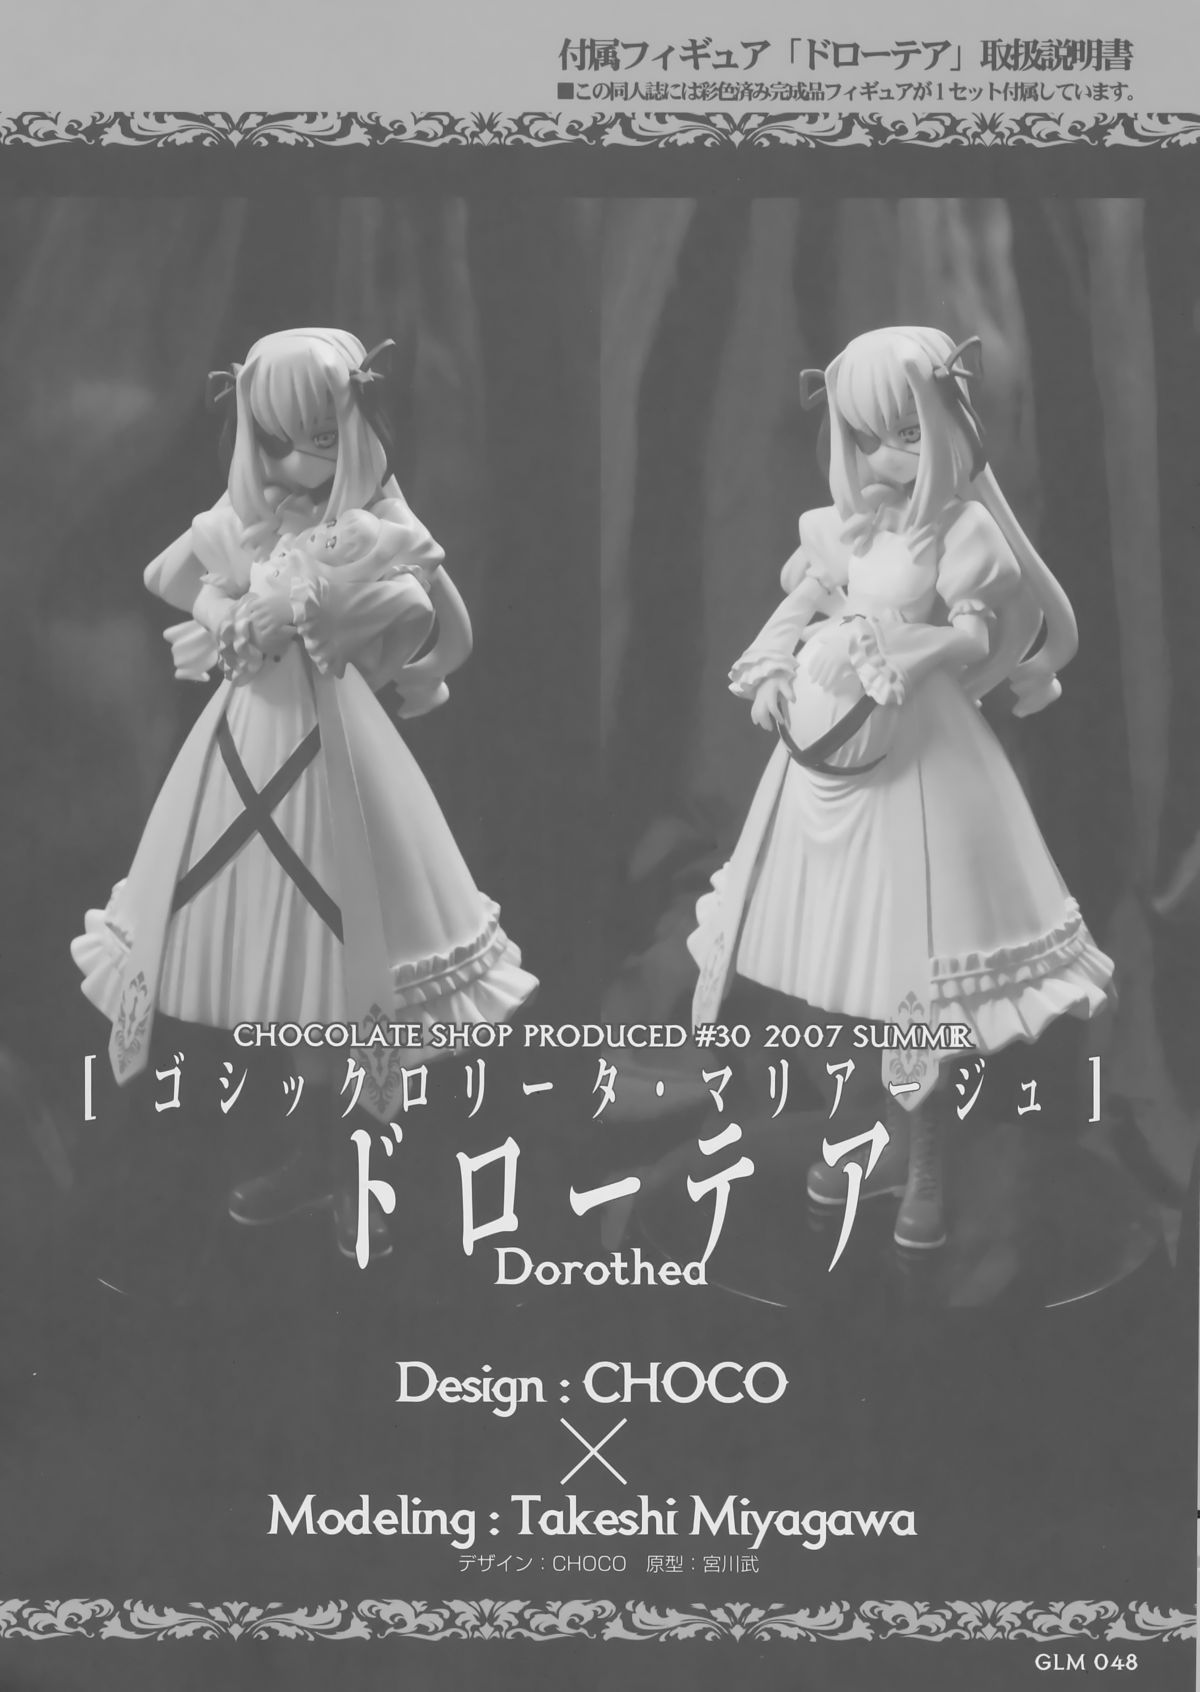 (C72) [チョコレート・ショップ (CHOCO)] ゴシックロリータ・マリアージュ